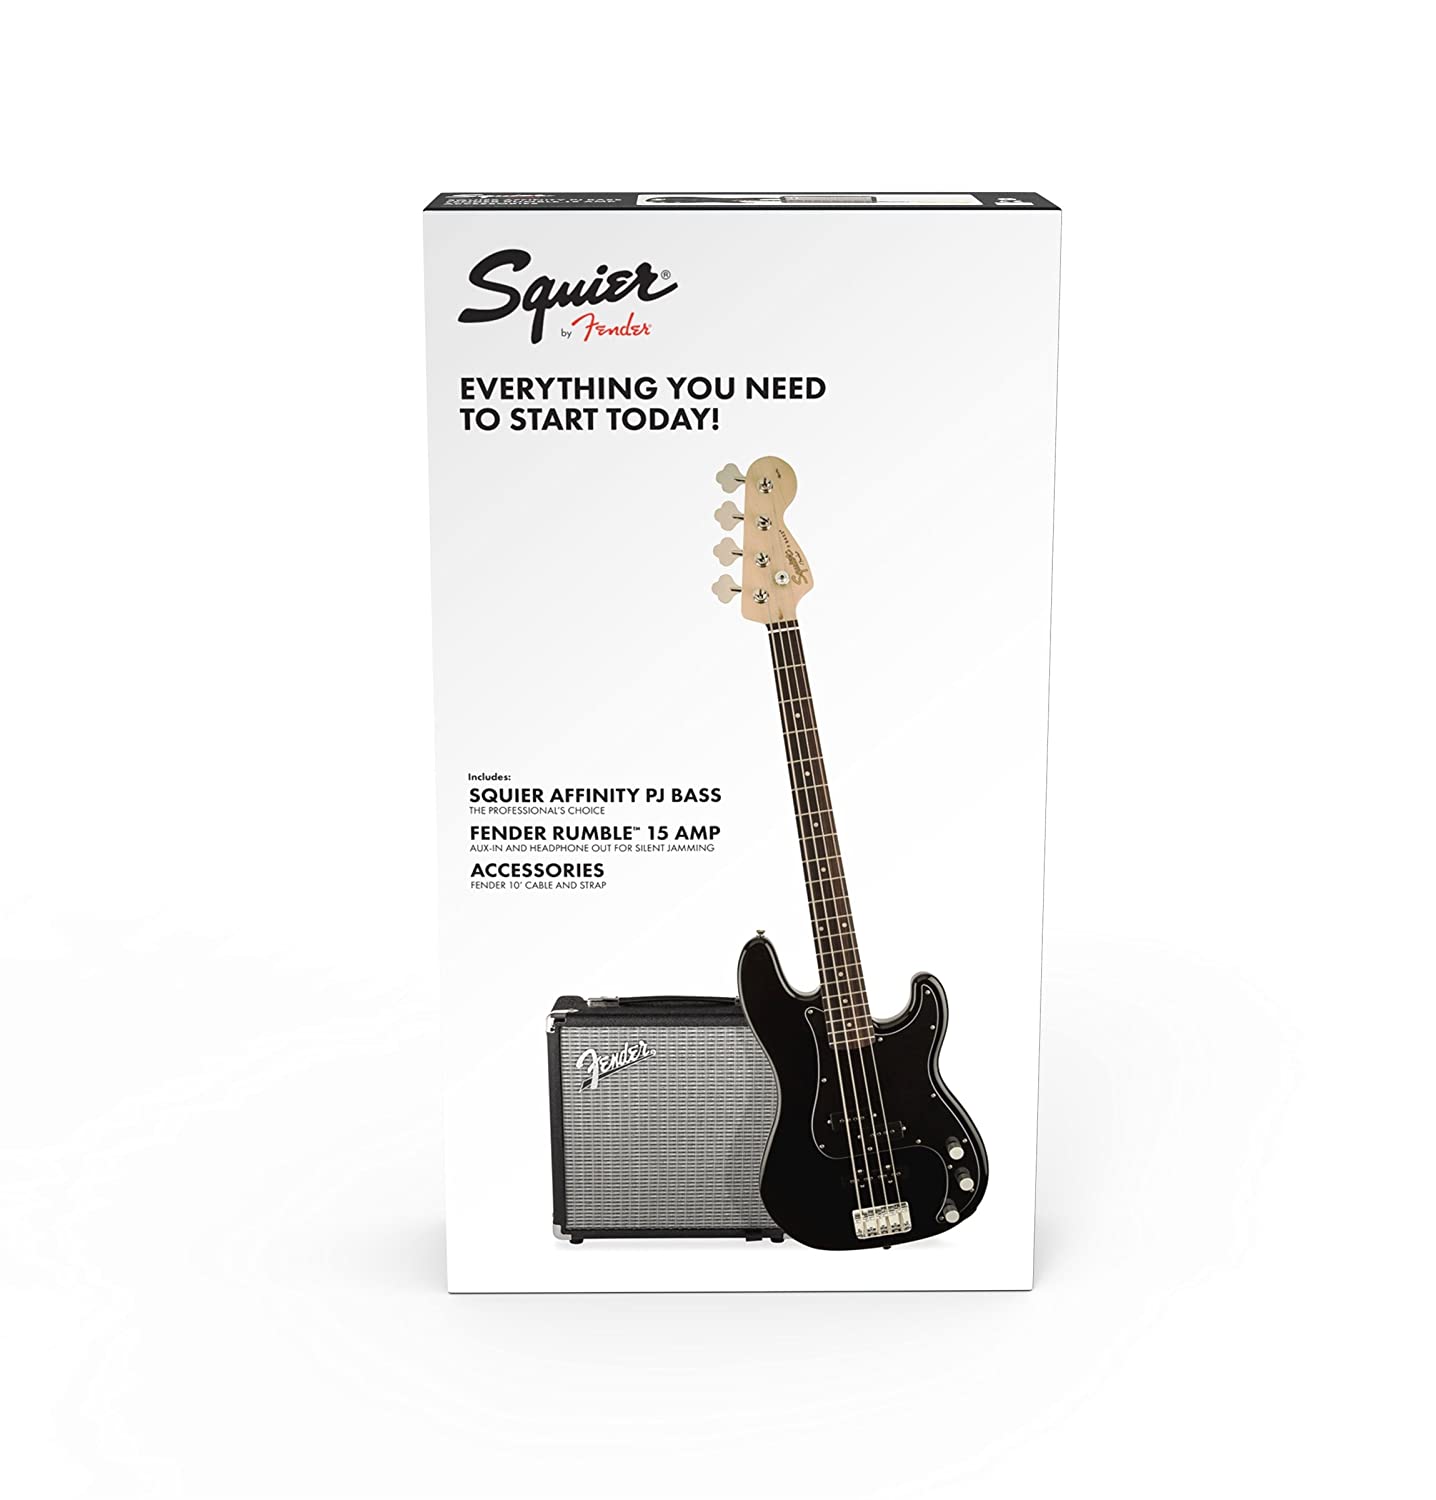 Fender Squier Affinity Series Precision Bass PJ Pack - Black